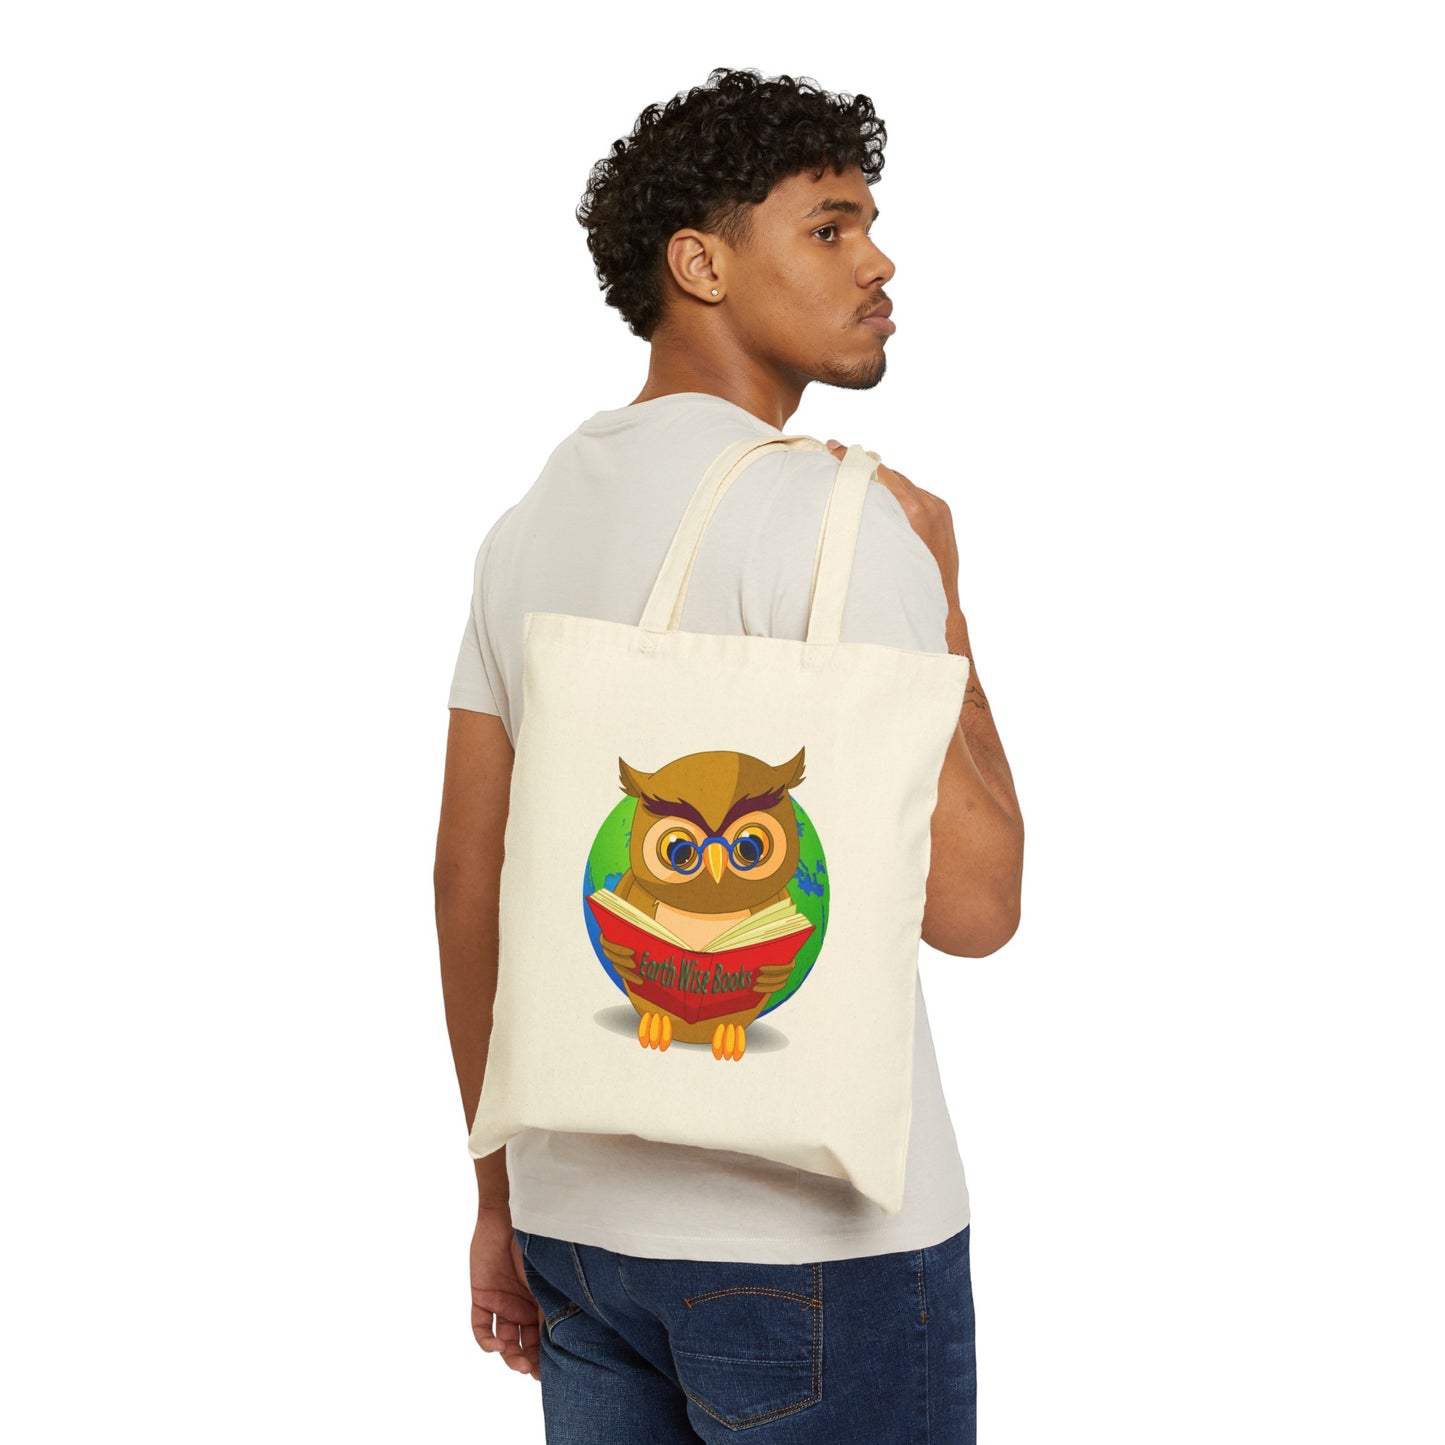 Cotton Canvas Tote Bag: Owl Reading